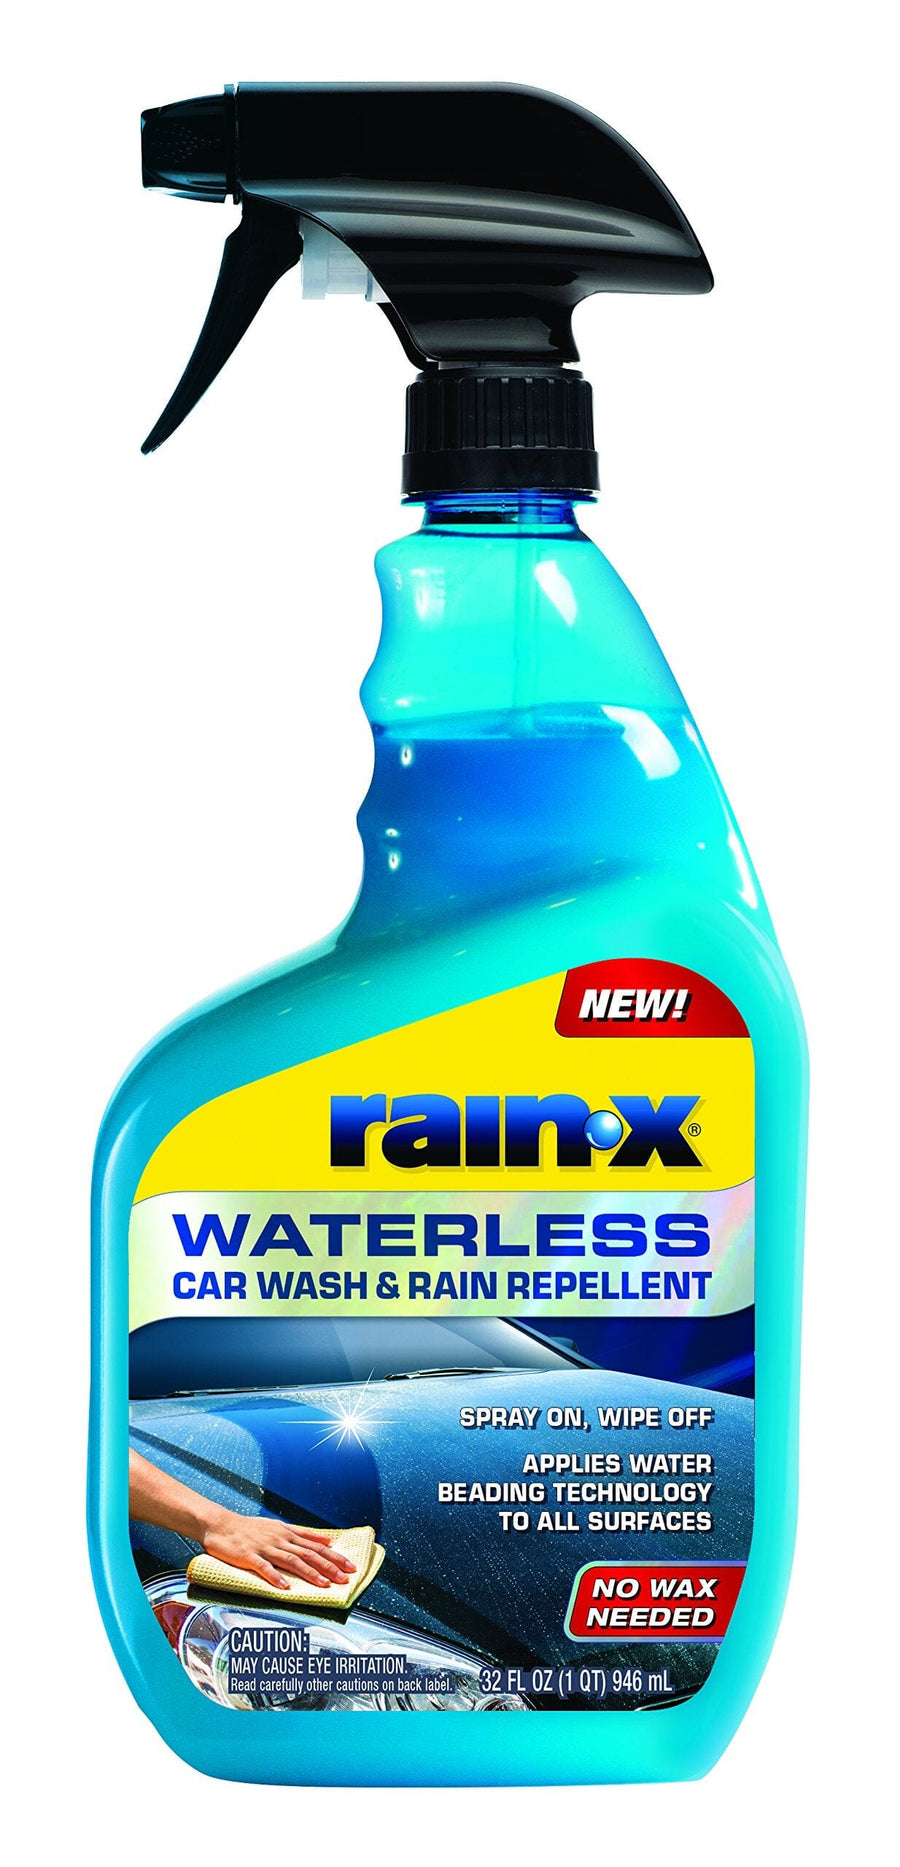 Rain X vs. Meguiars waterless car wash 